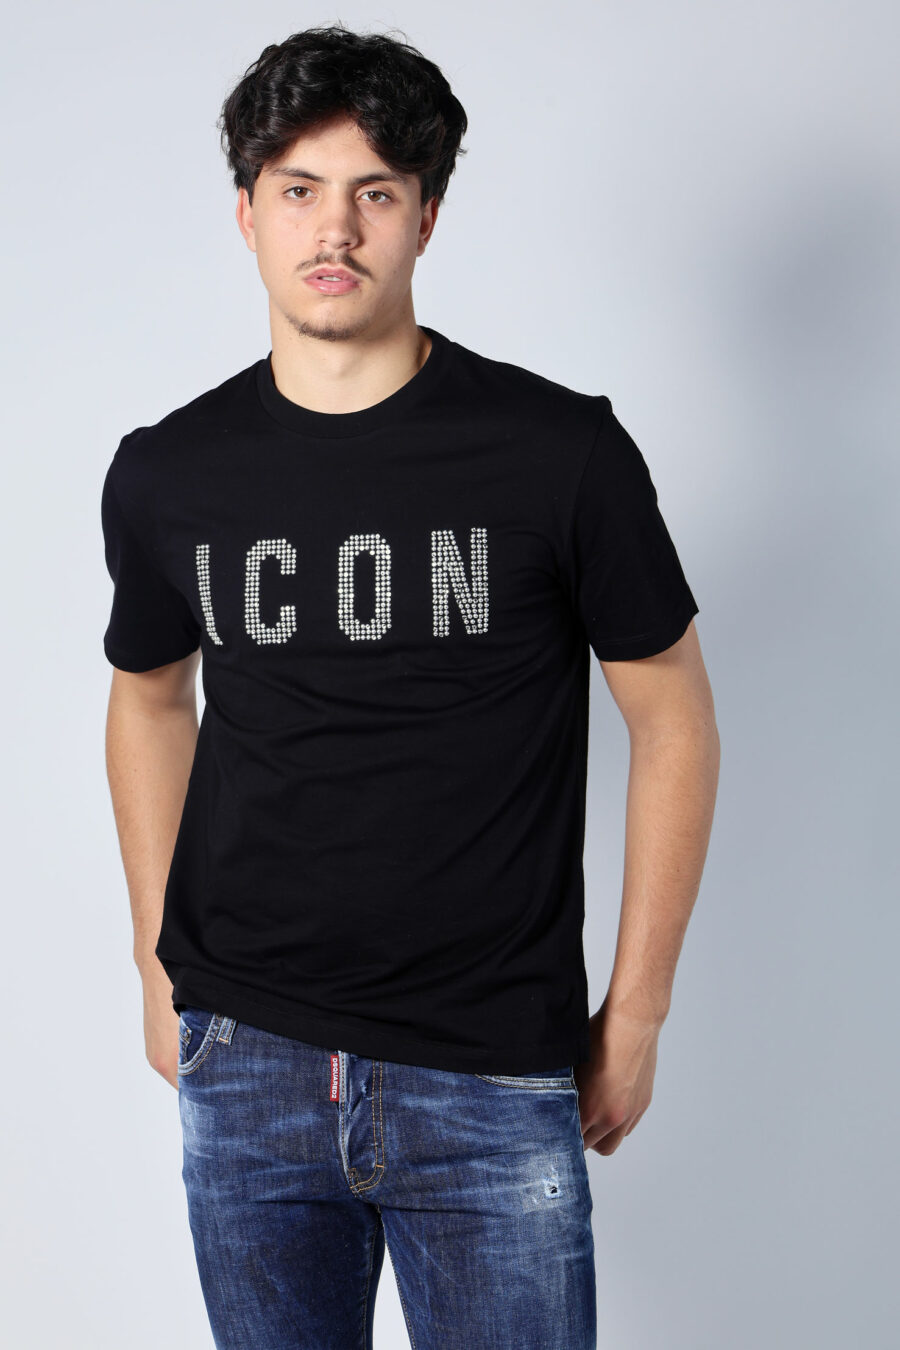 T-shirt preta com logótipo "icon" axadrezado branco - Untitled Catalog 05673